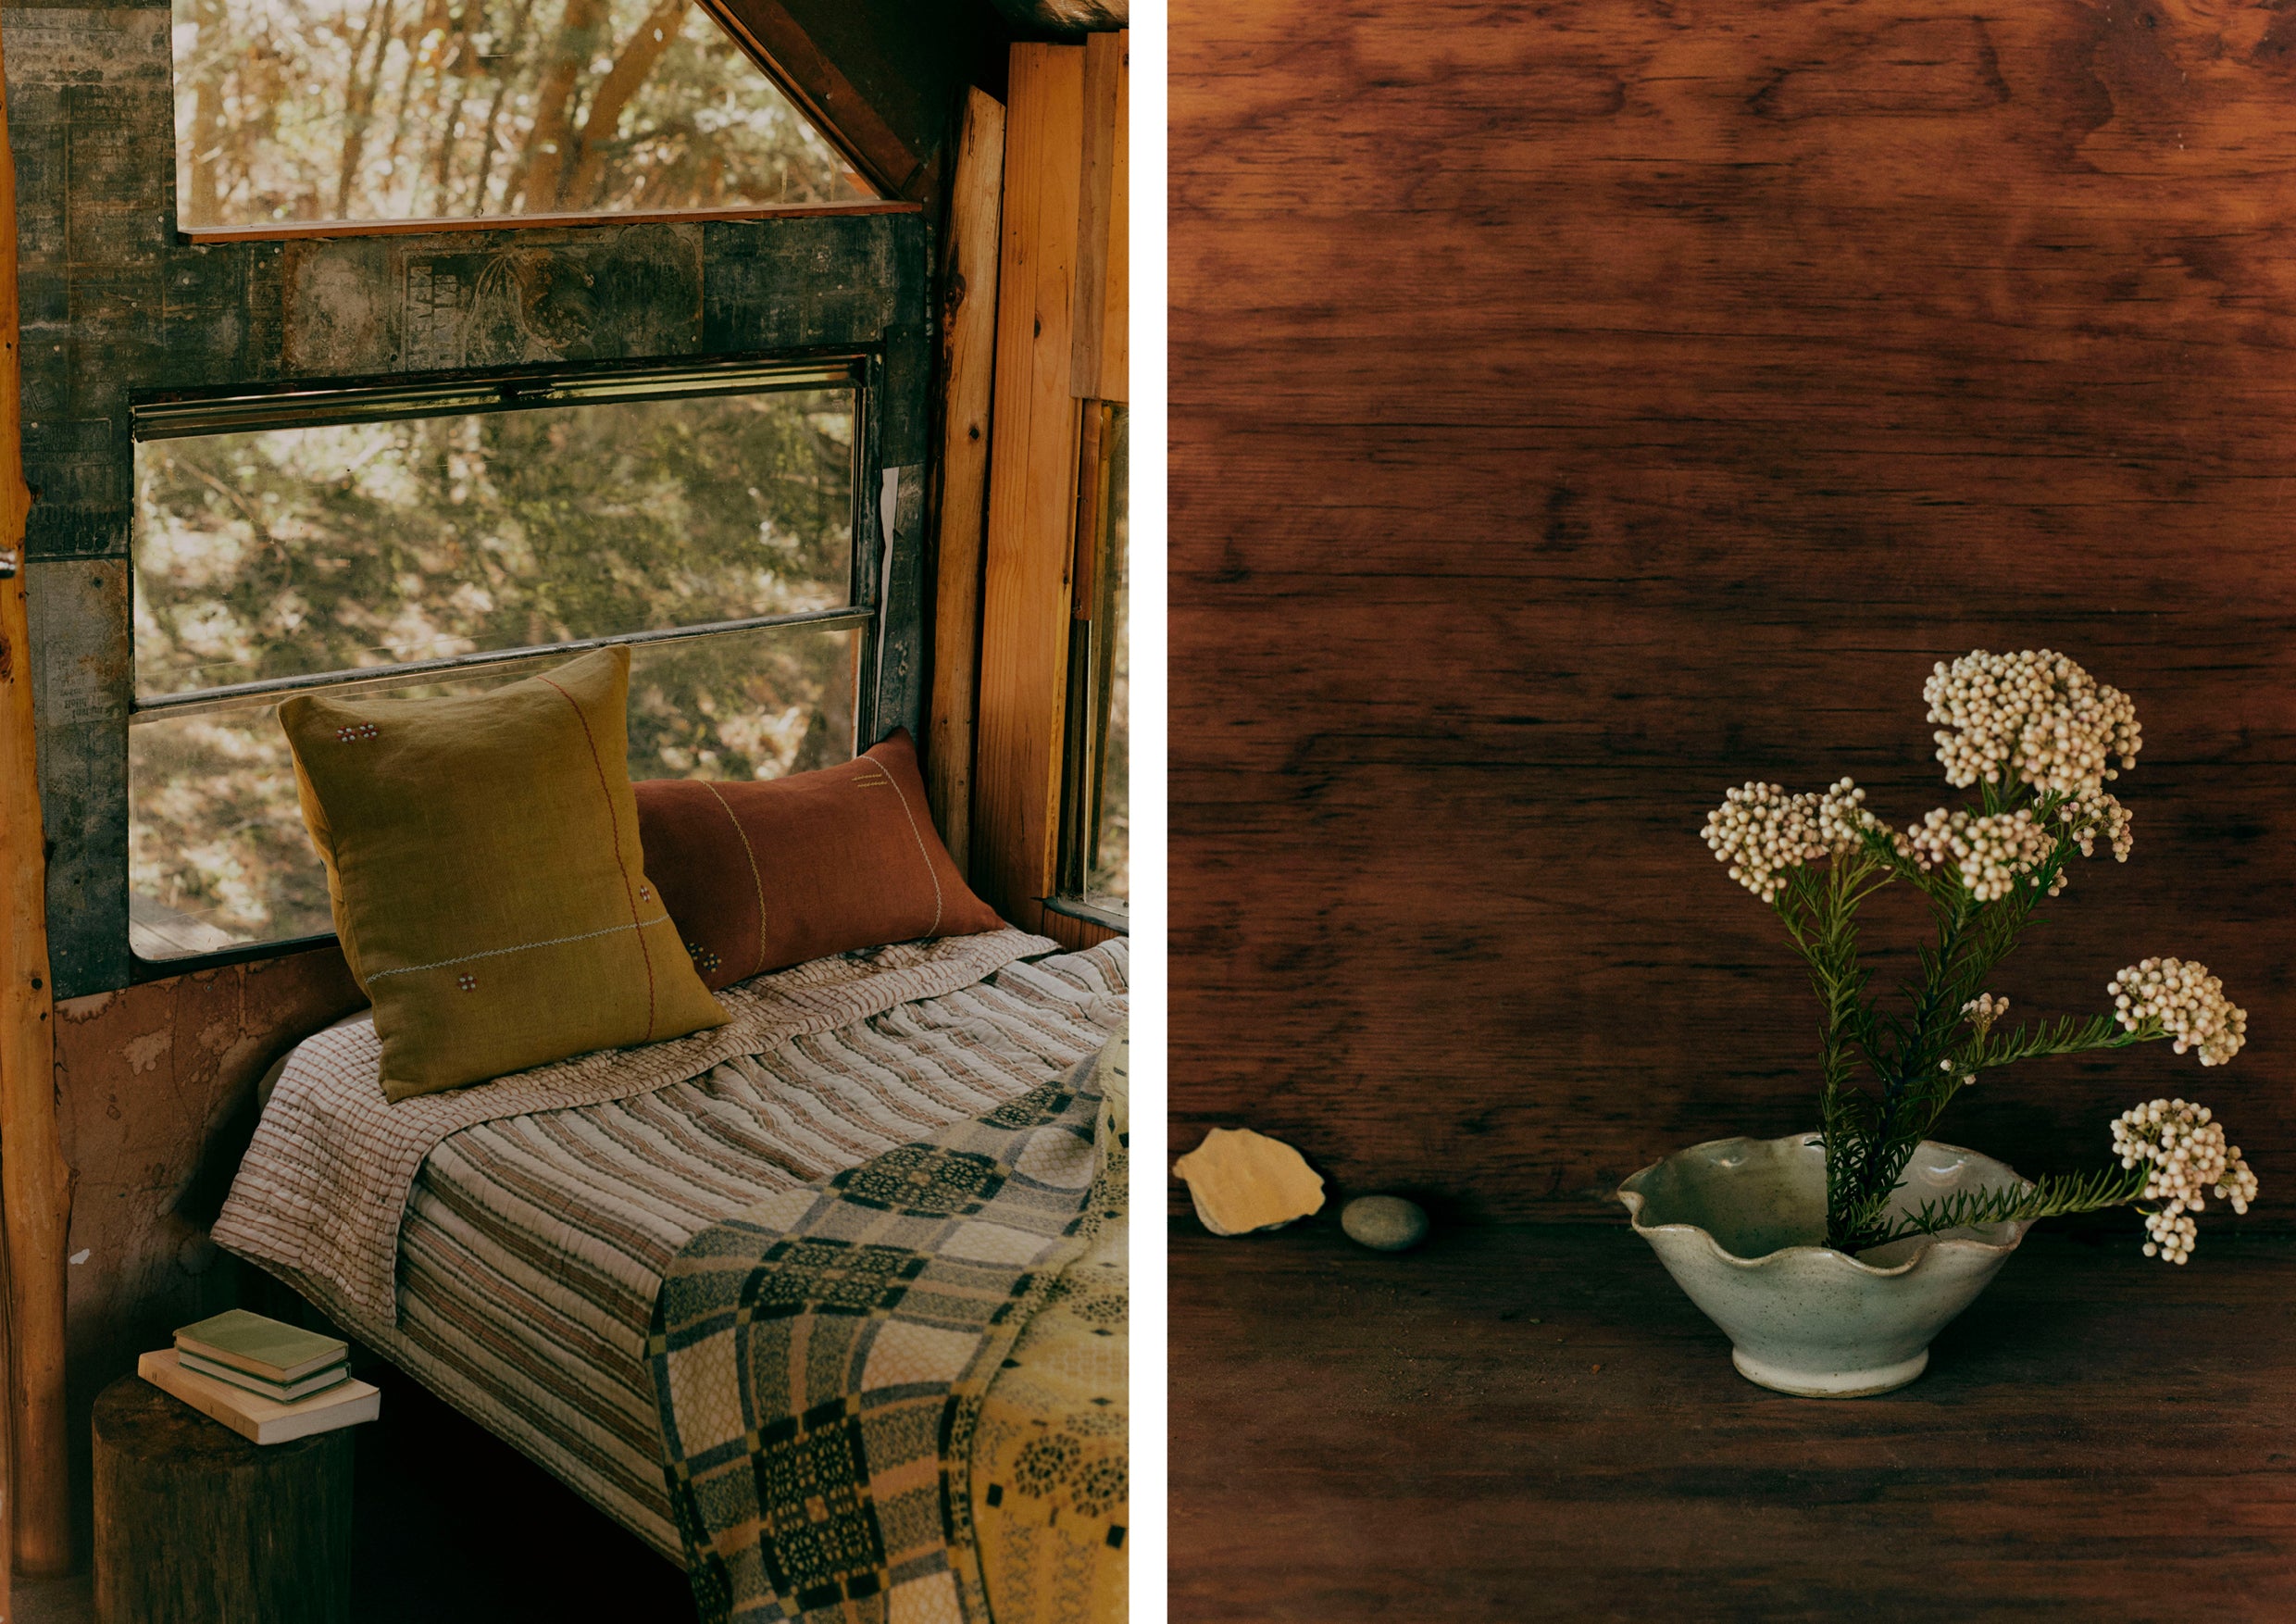 A rustic bedroom in a cabin